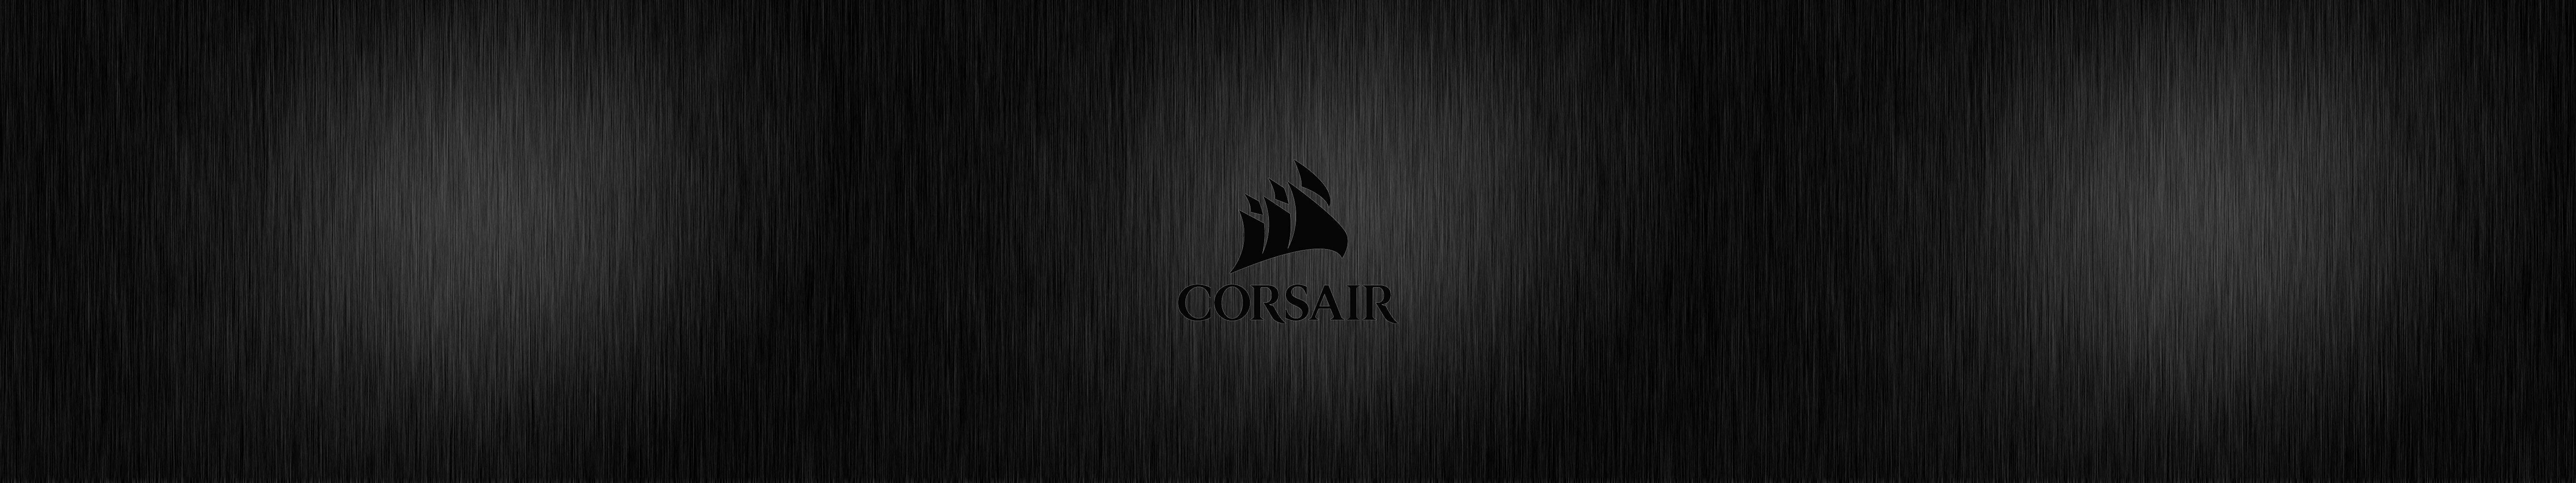 Black Corsair Triple Screen Wallpaper